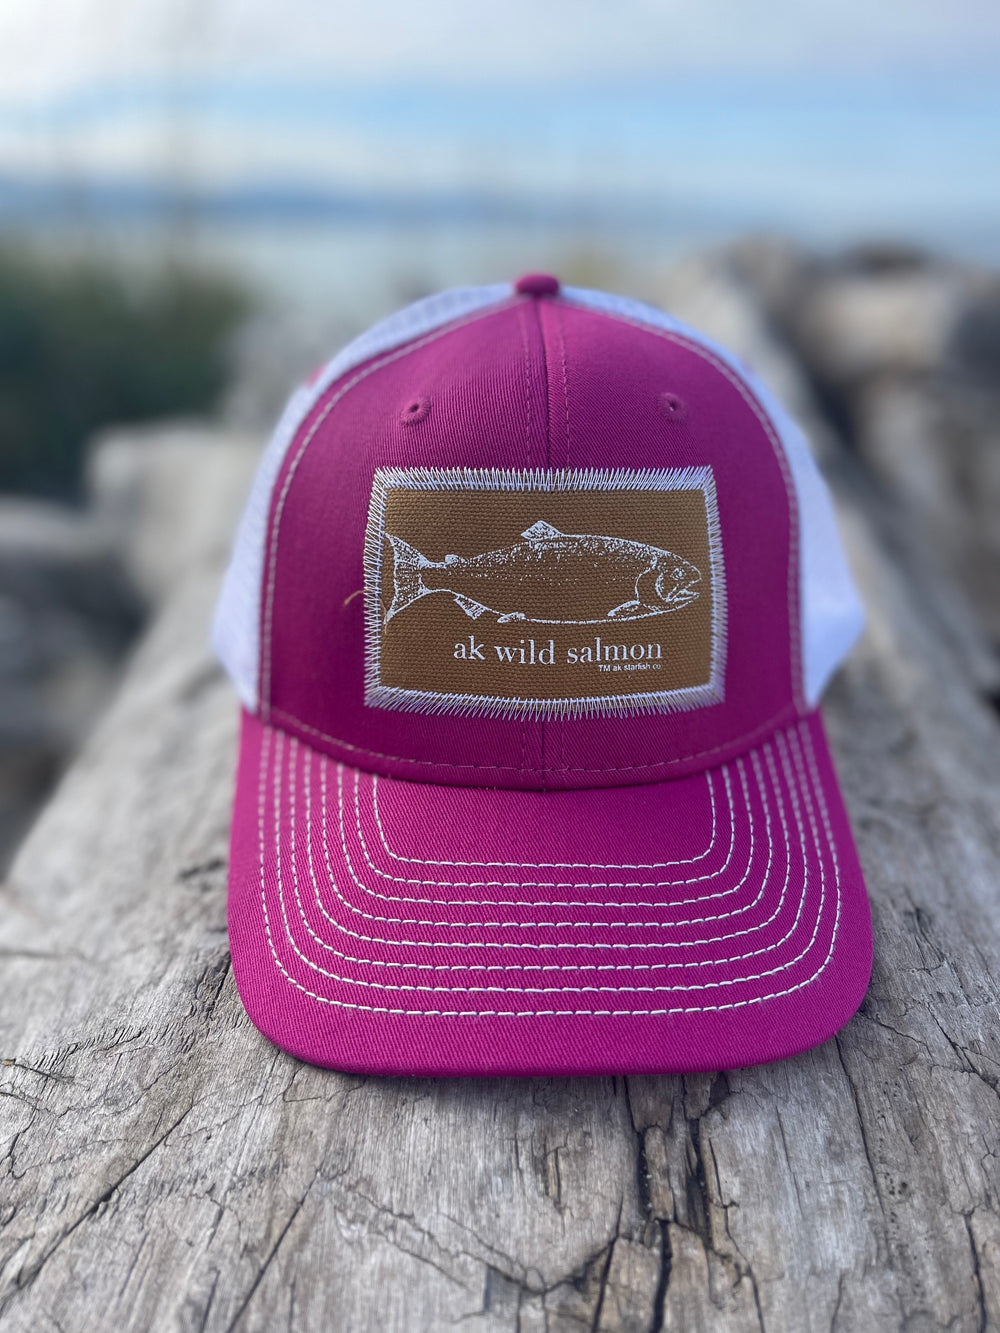 Fireweed / White AK Wild Salmon Patch Hat. $38.00